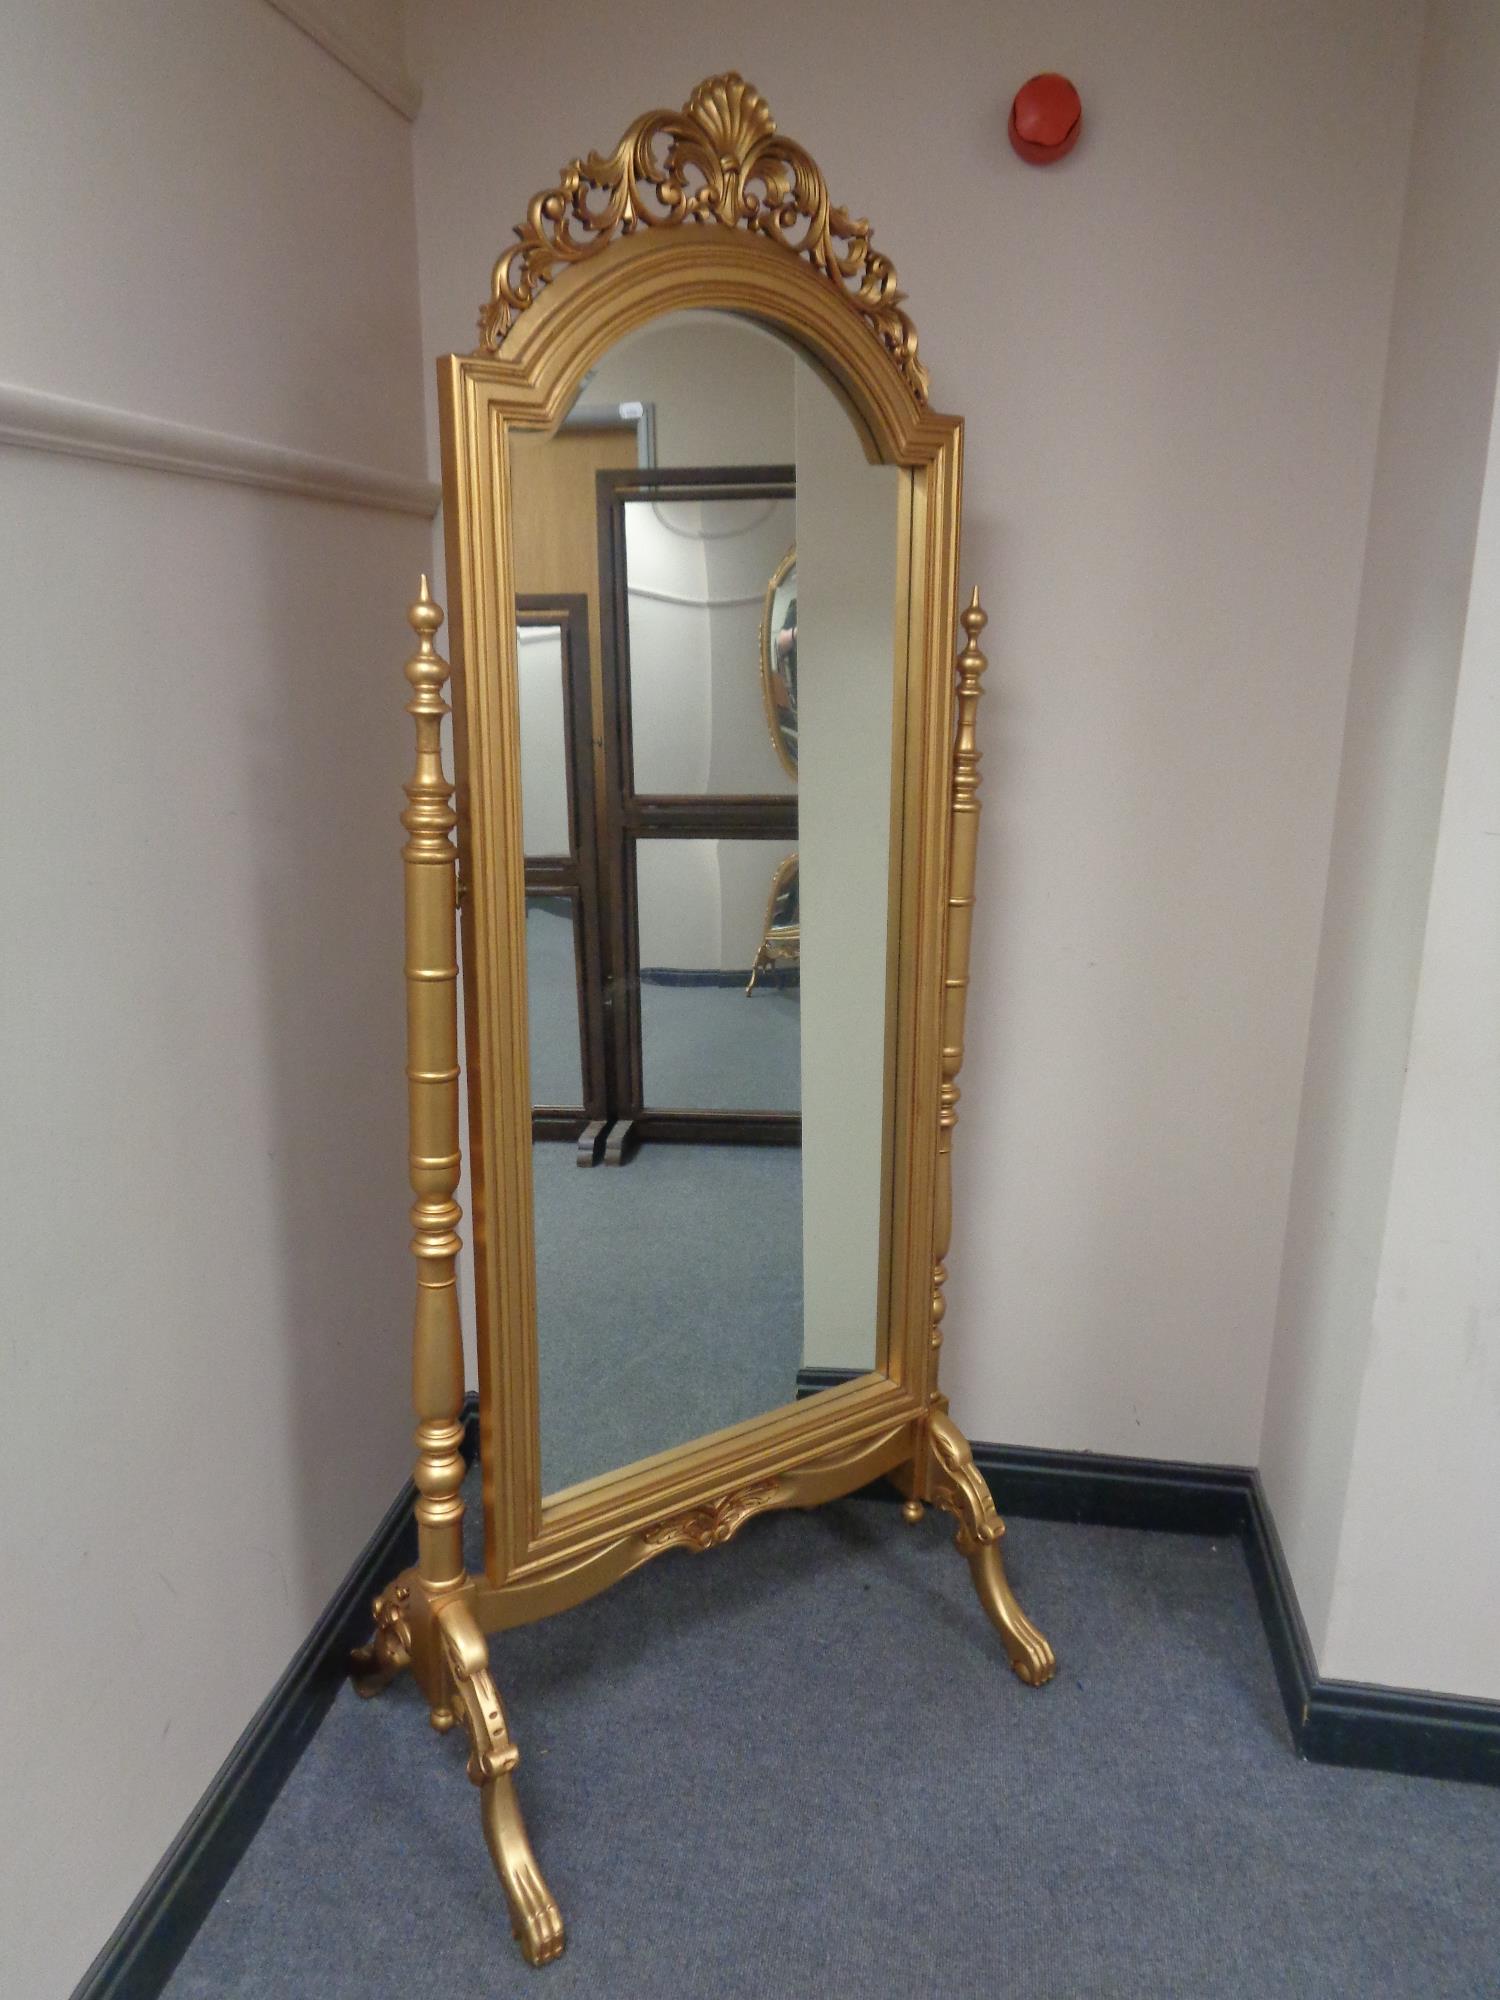 A 19th century style gilt cheval mirror.